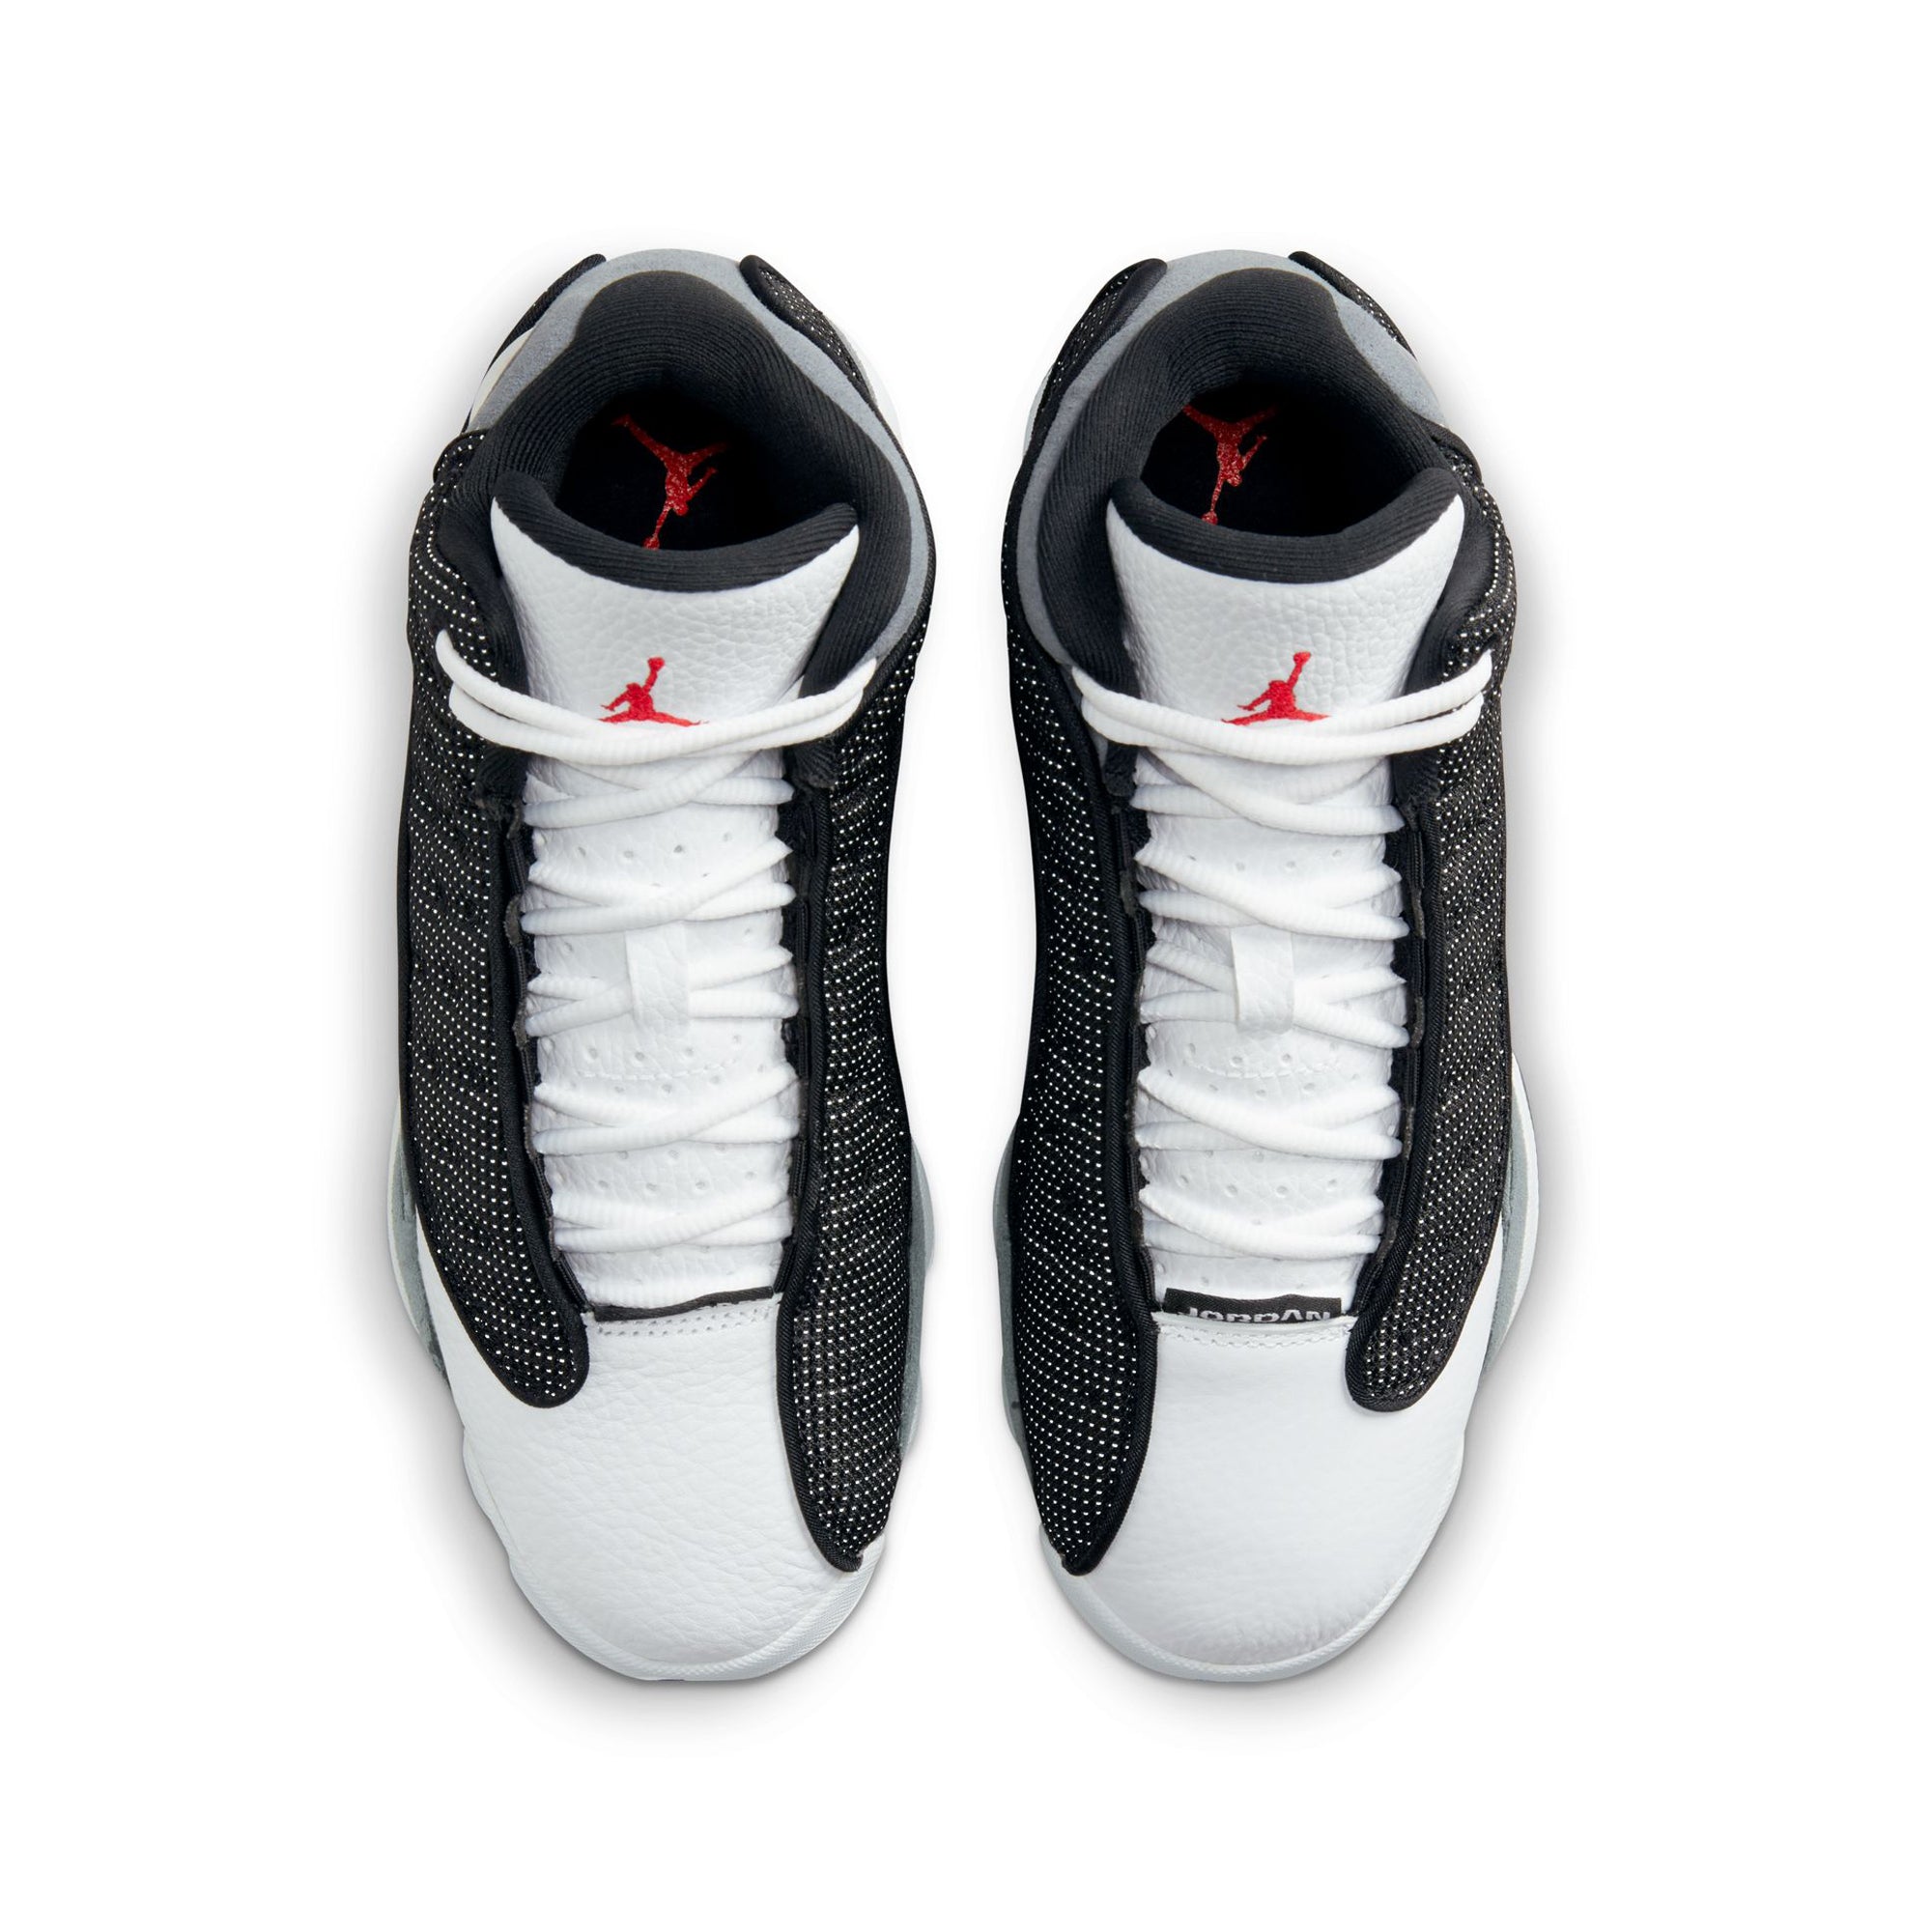 Air Jordan 13 Retro Shoe.